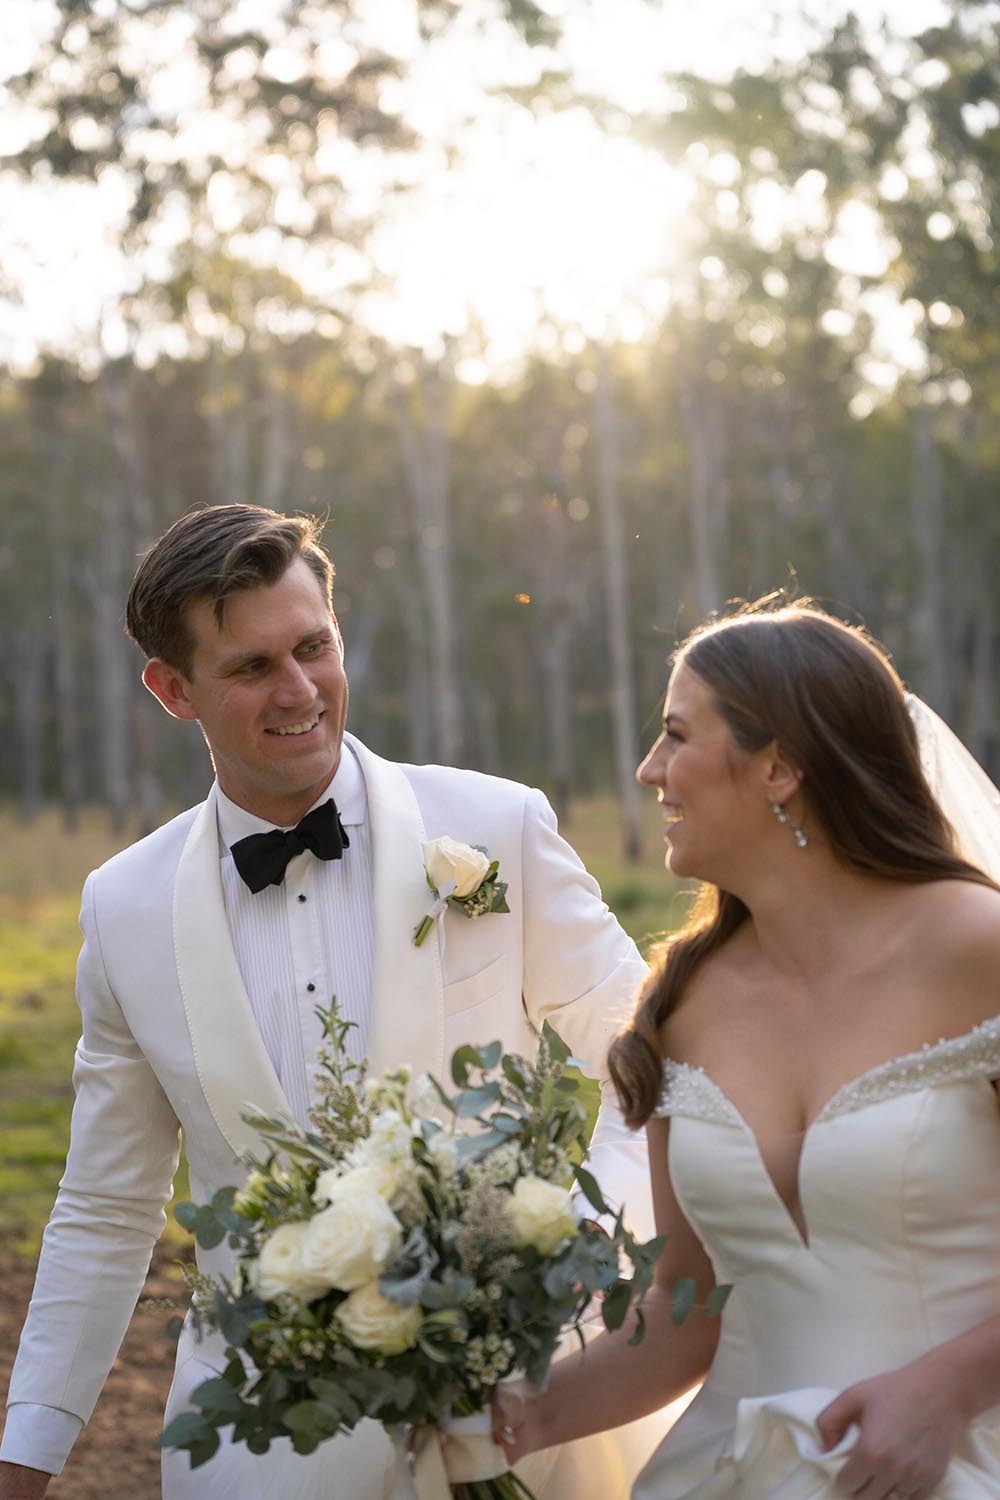 Wedding Photography - bride and groom